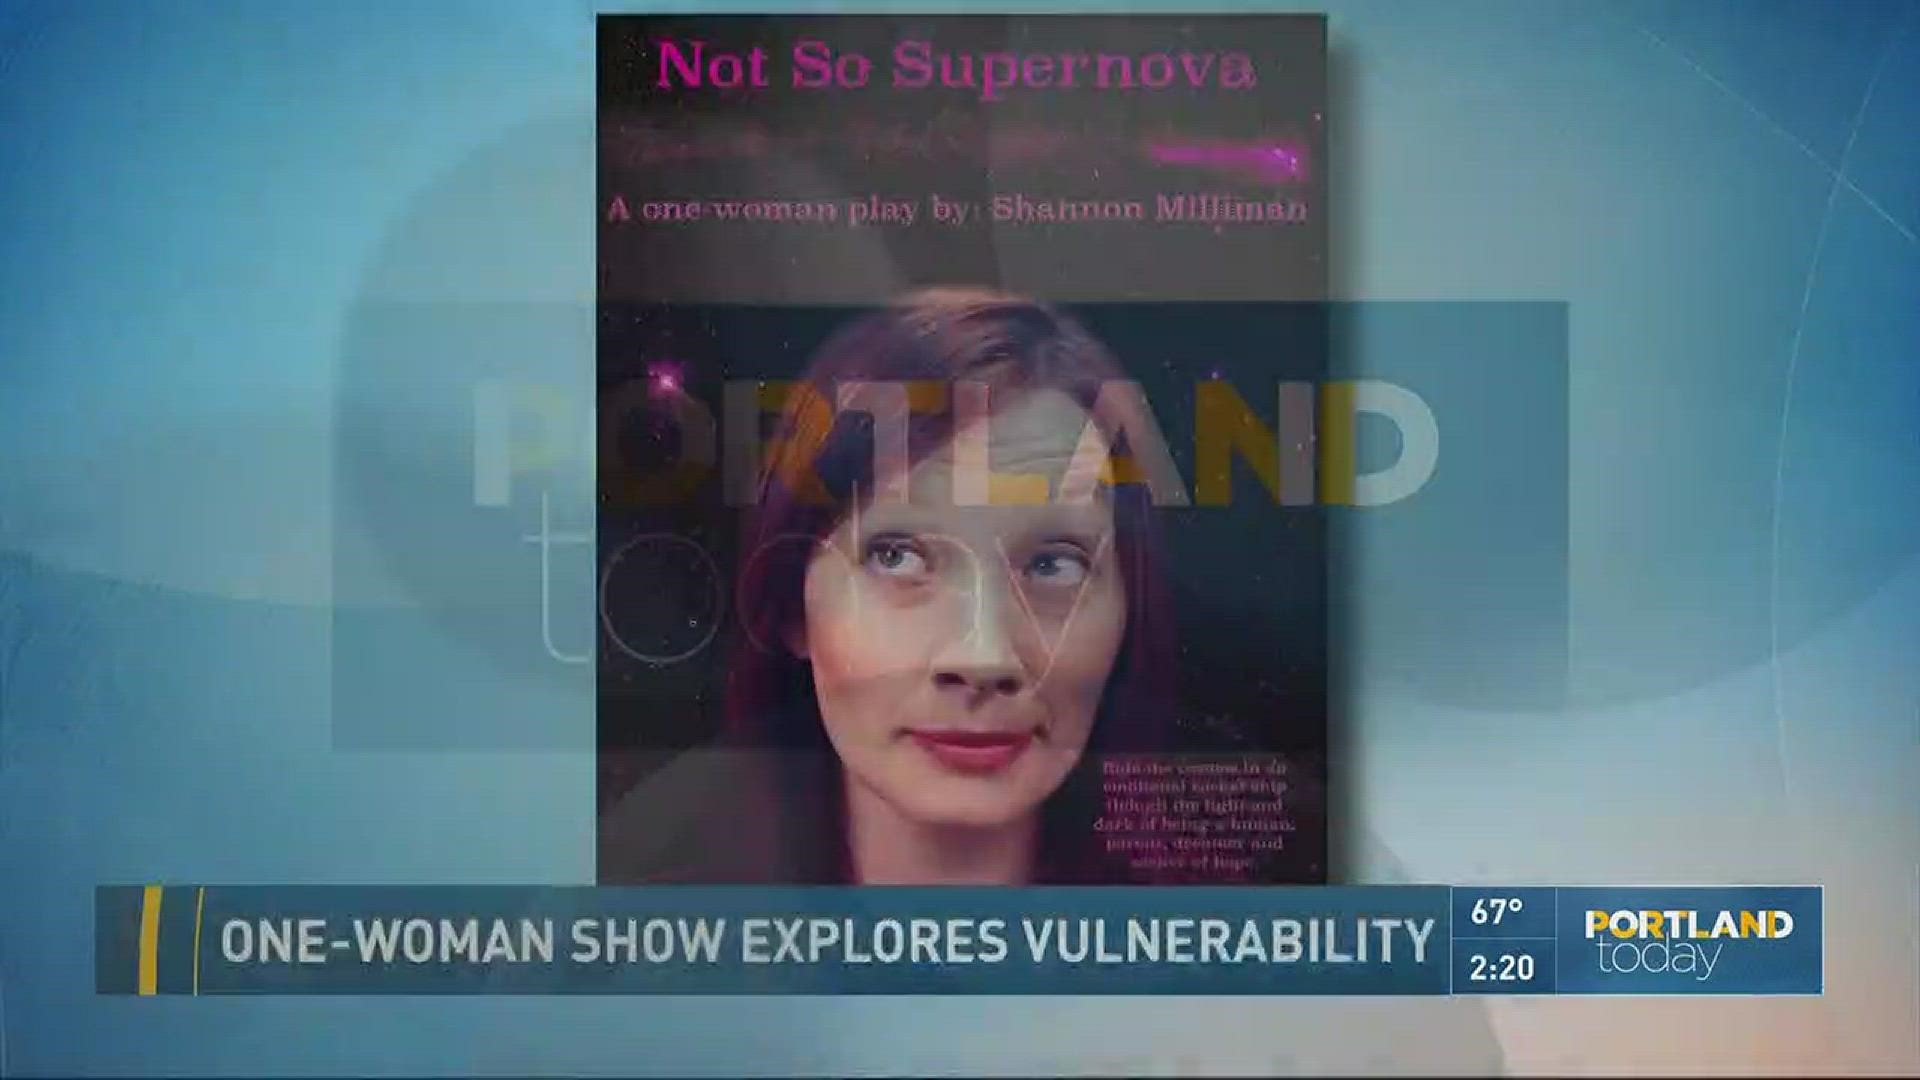 One-woman show explores vulnerability